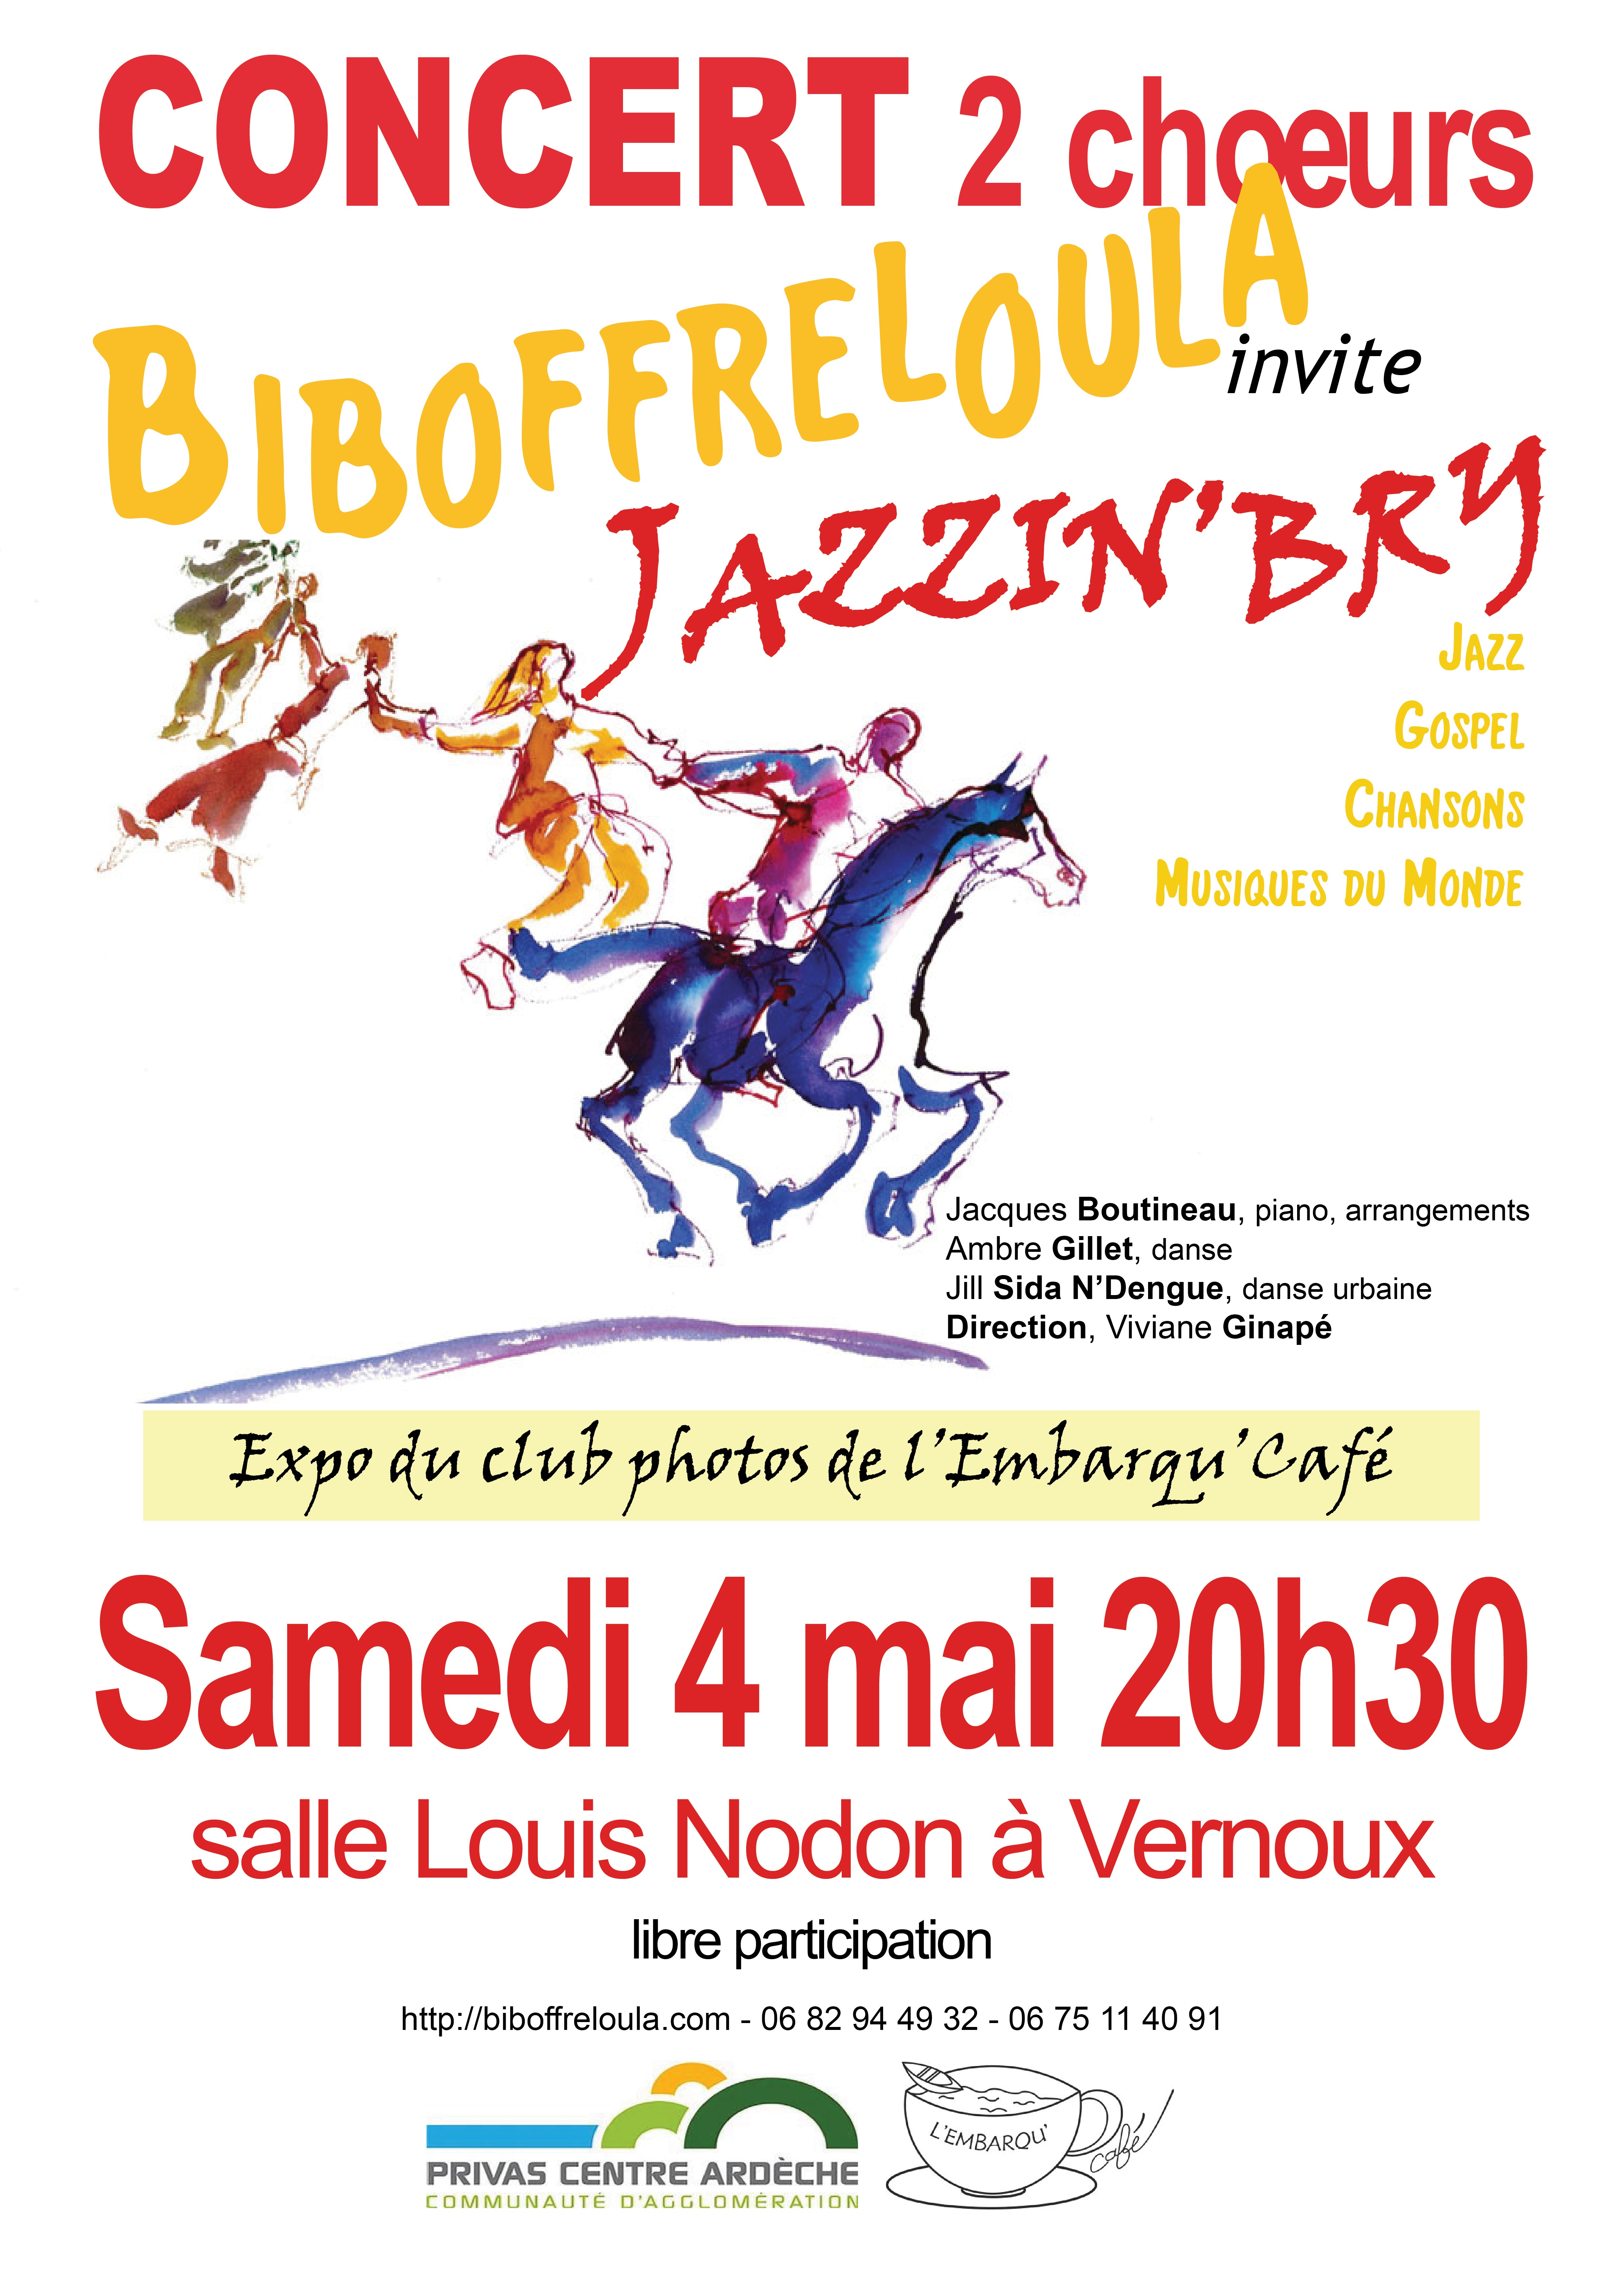 Alle leuke evenementen! : Concert 2 chœurs : Biboffreloula invite Jazzin'Bry